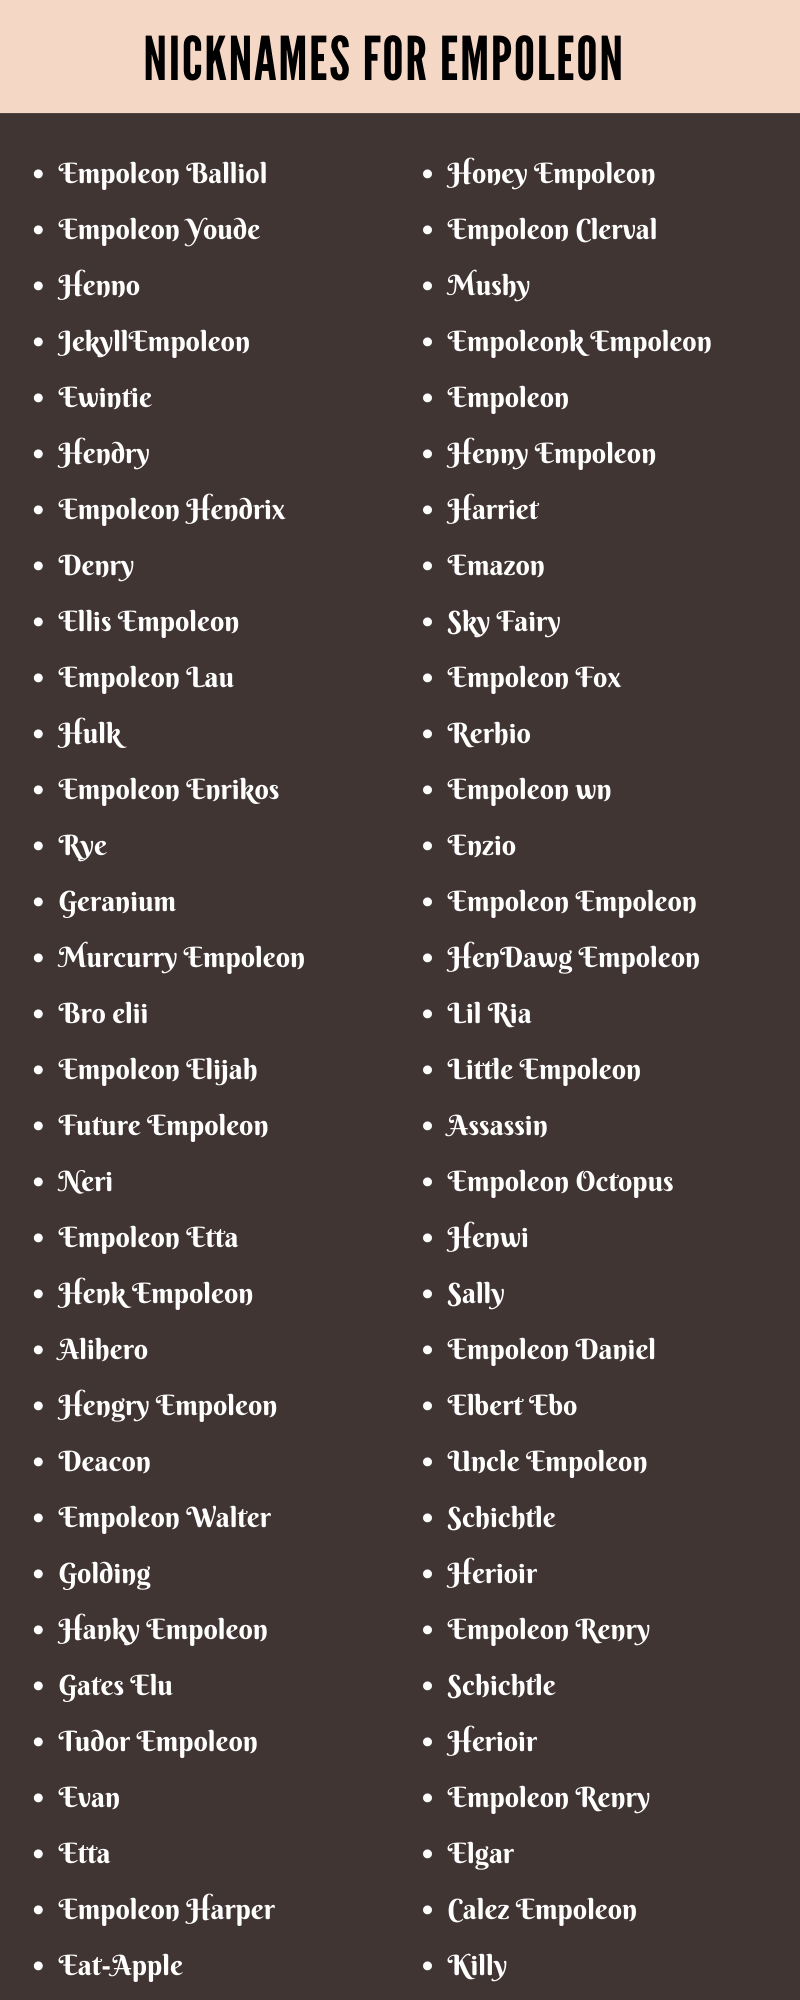 Nicknames For Empoleon